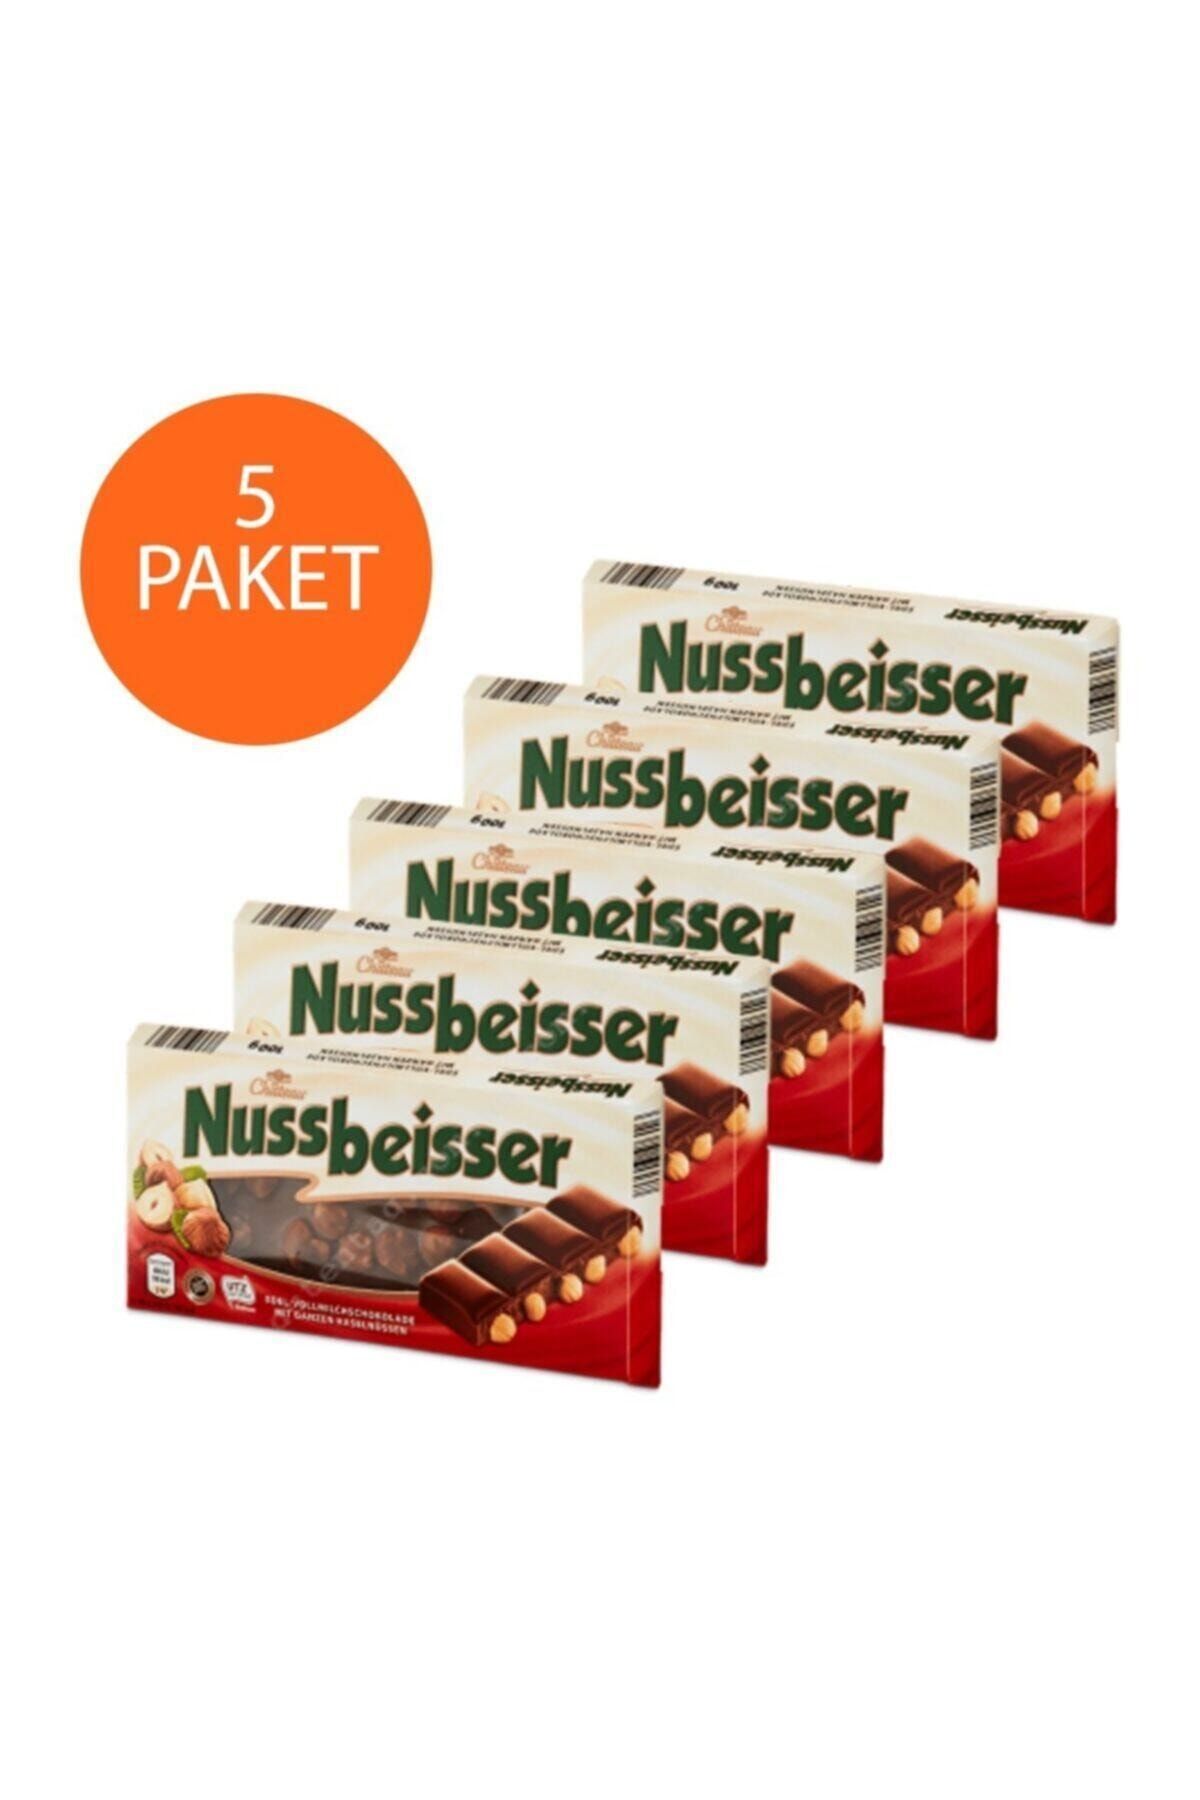 Choceur Nussbeisser Bol Fındıklı Alman Çikolatası 100gr 5'li Paket (100grx5)